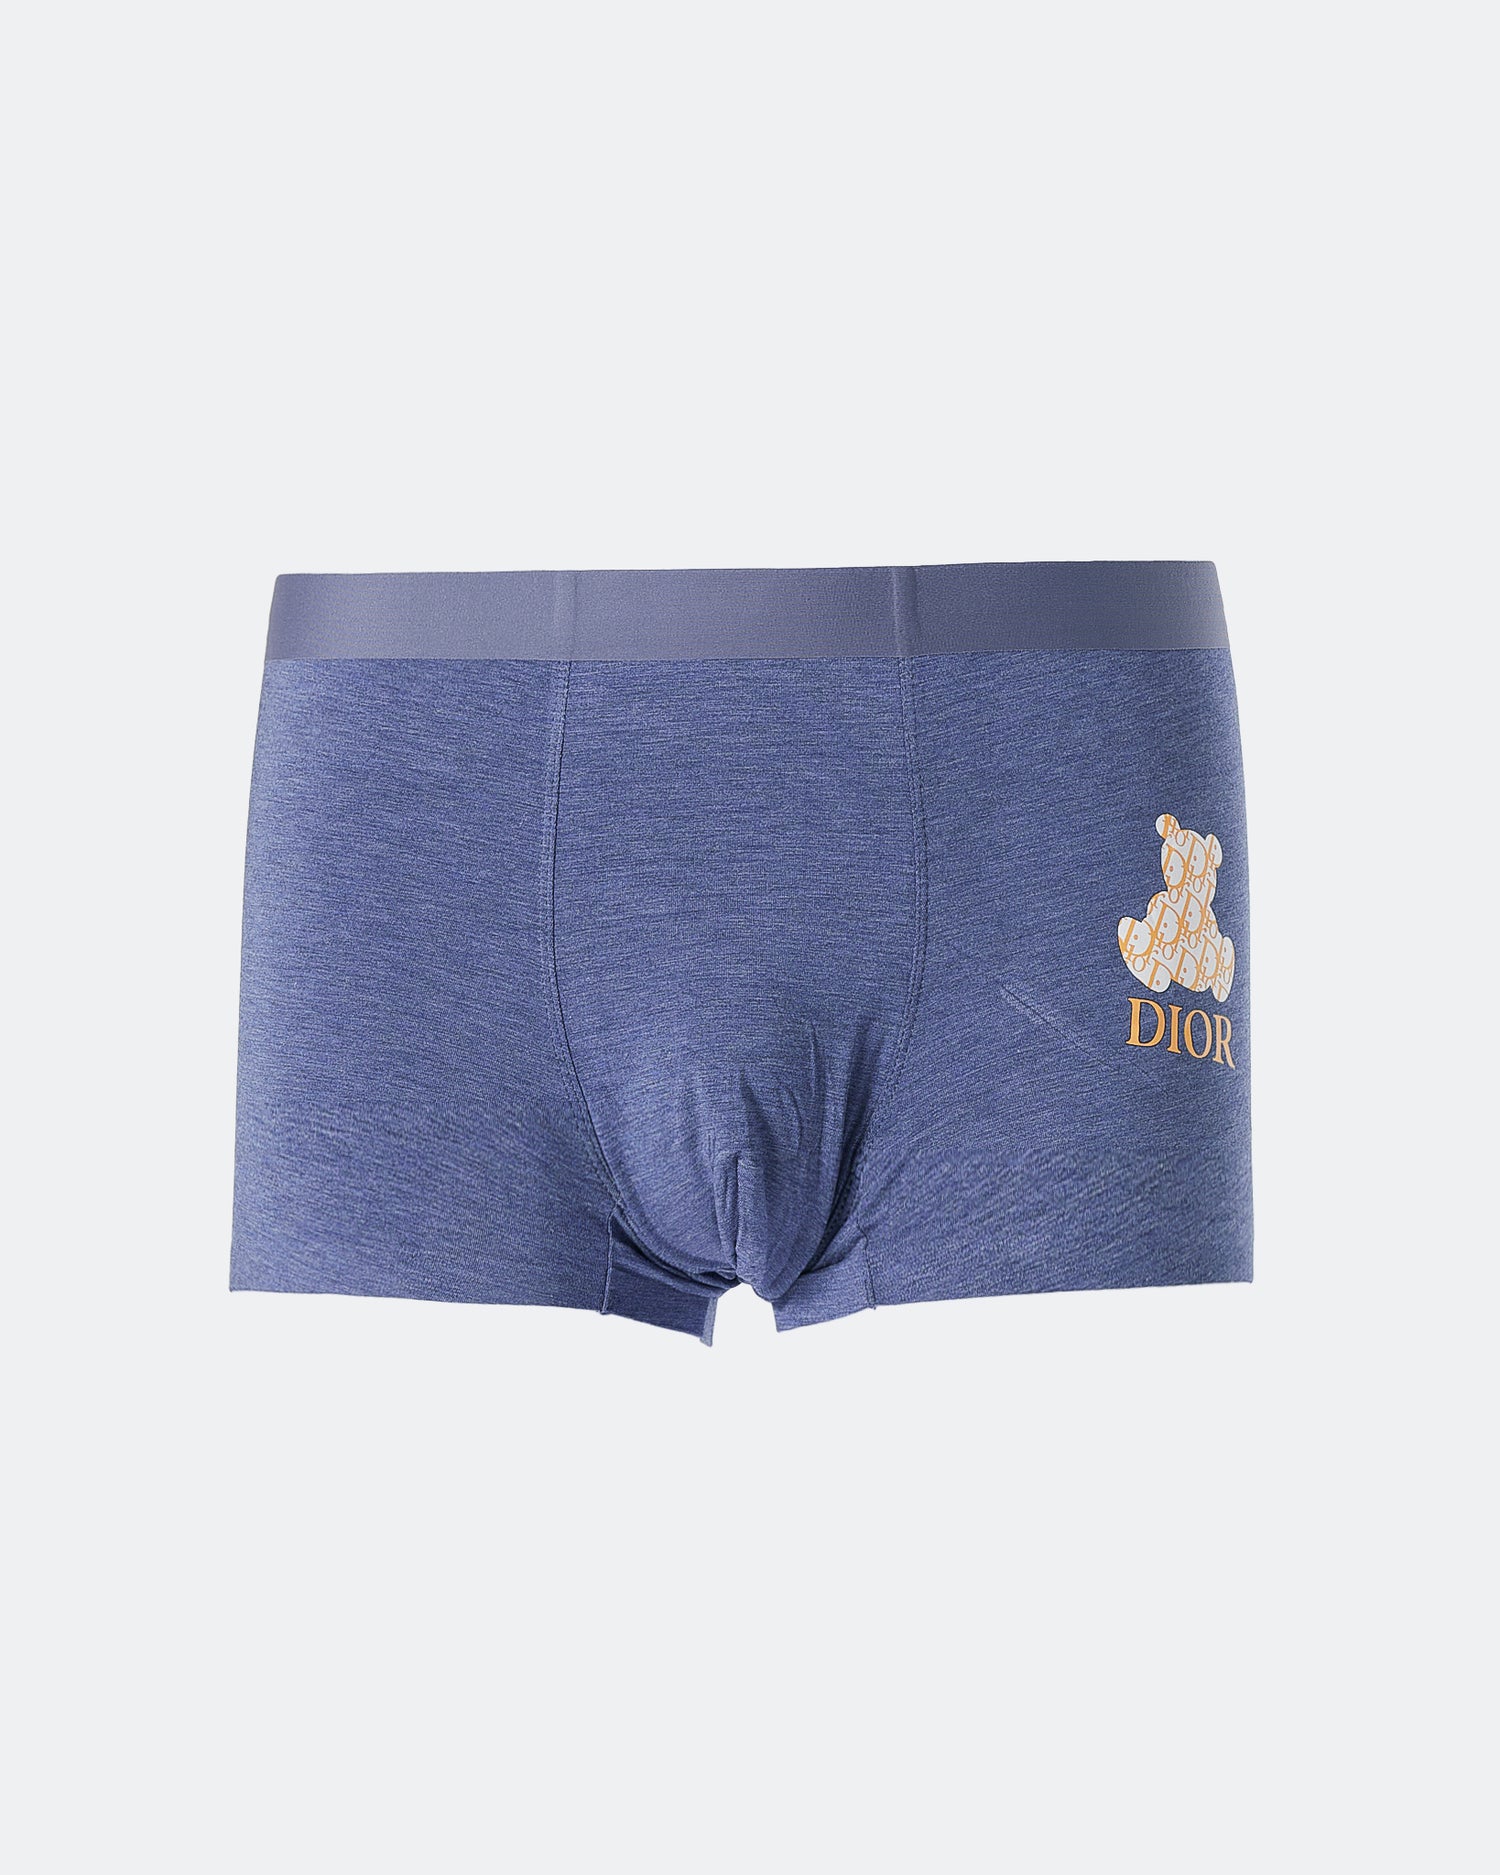 Teddy Bear Printed Men Underwear 5.90